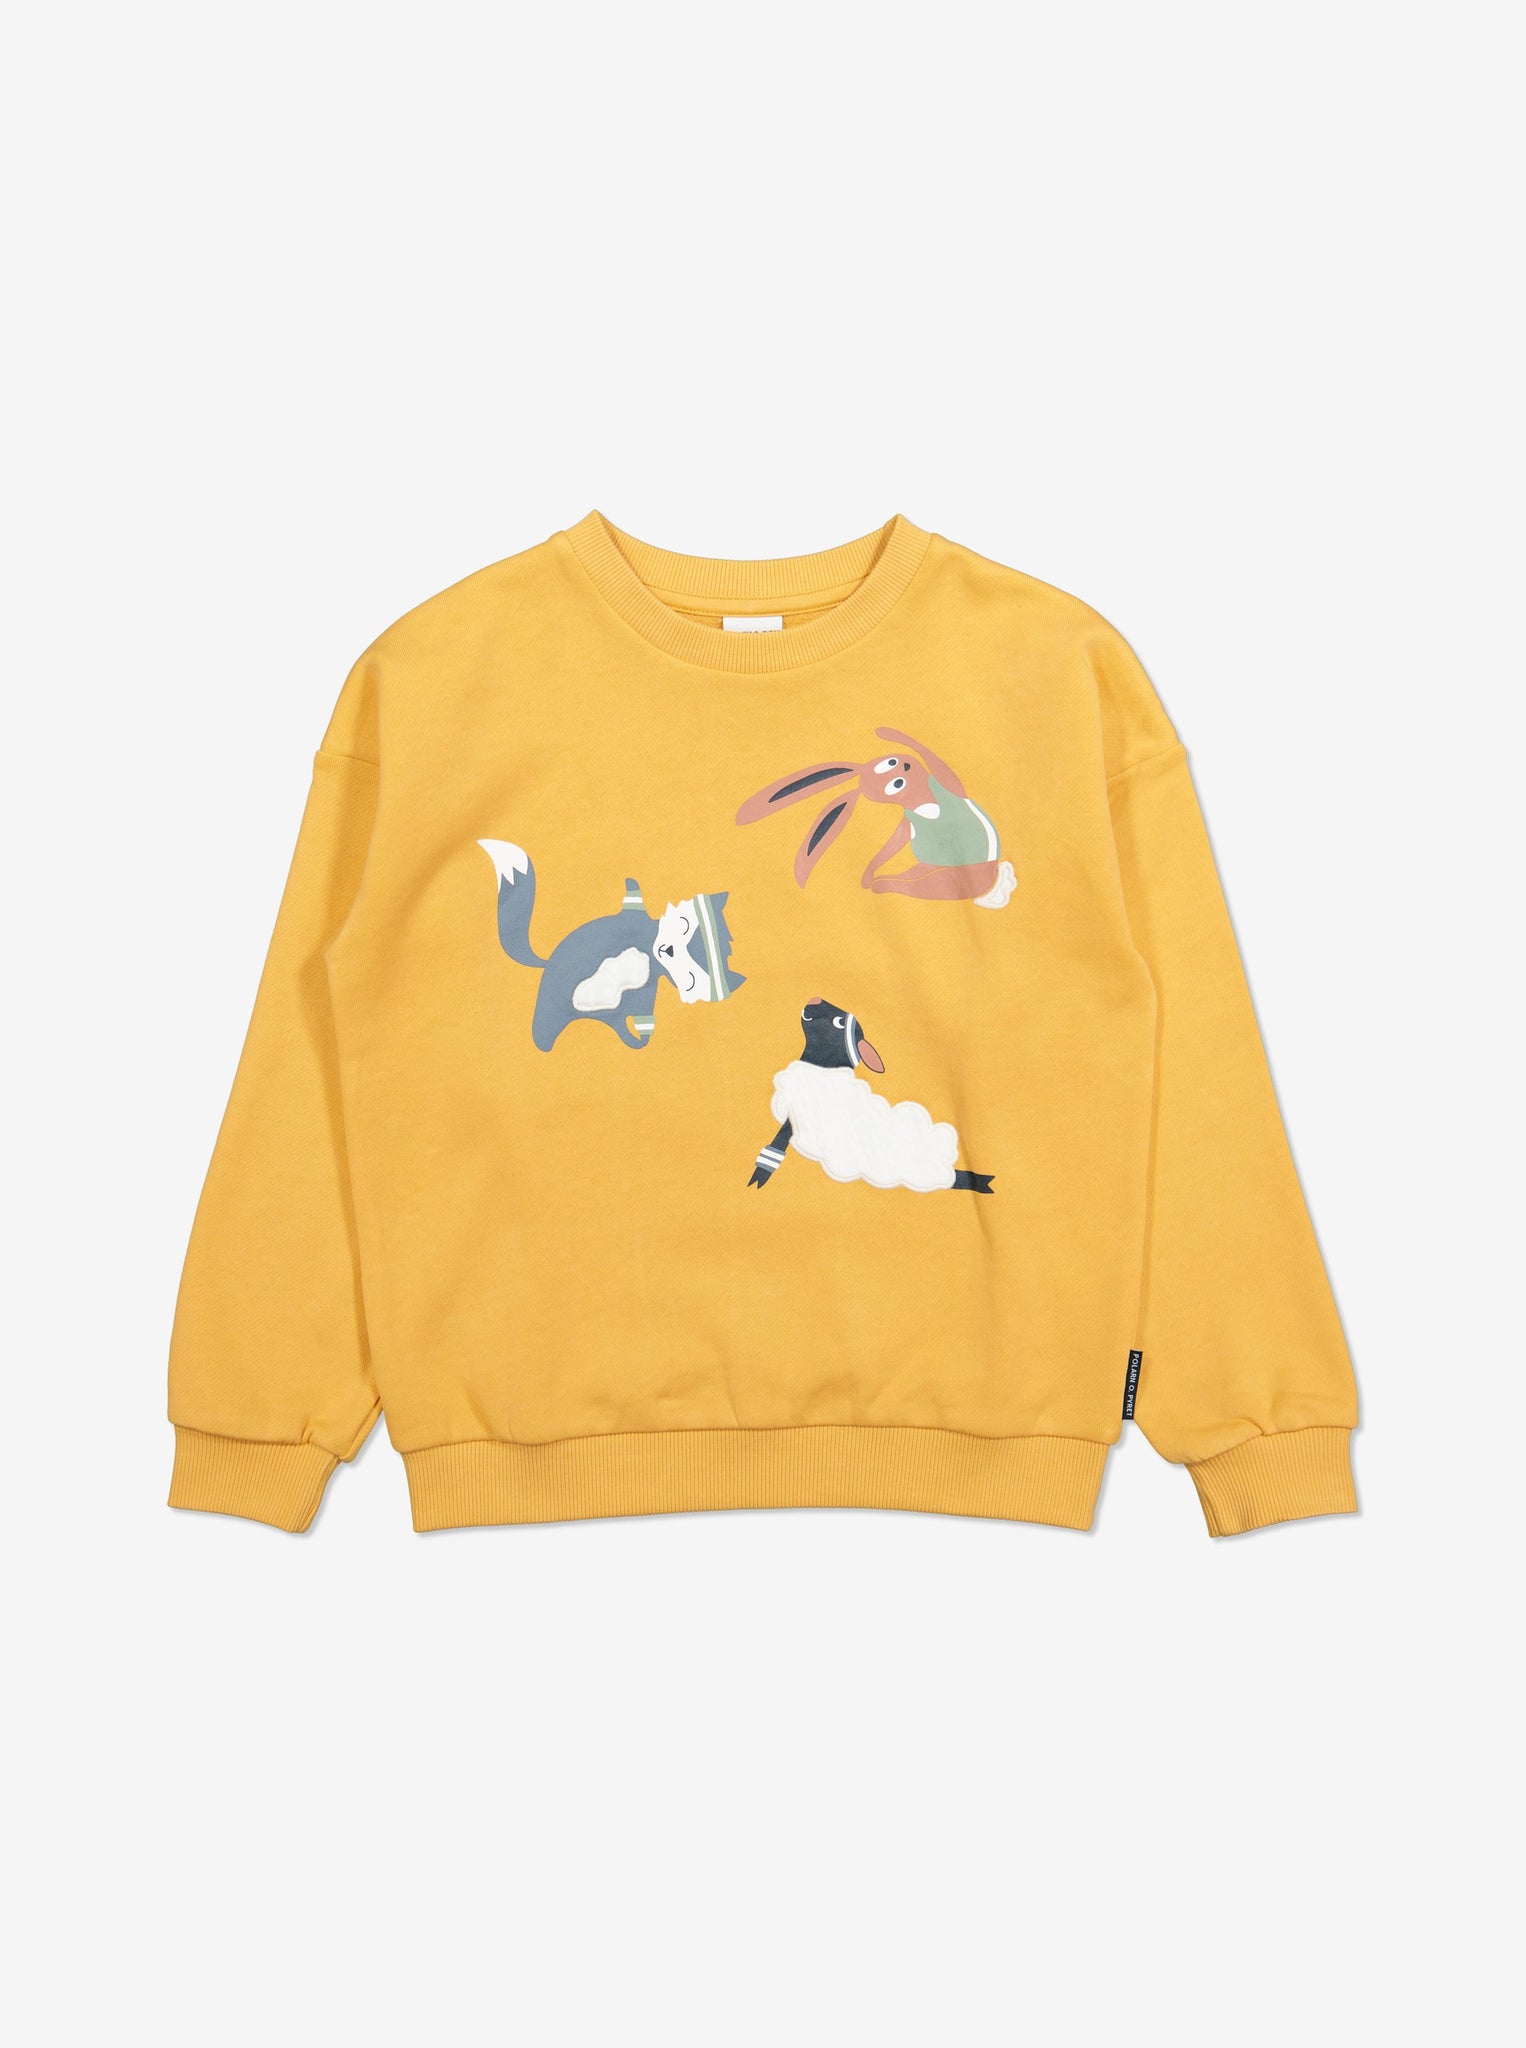  Organic Yellow Kids Animal Sweatshirt from Polarn O. Pyret Kidswear. Made with 100% organic cotton.